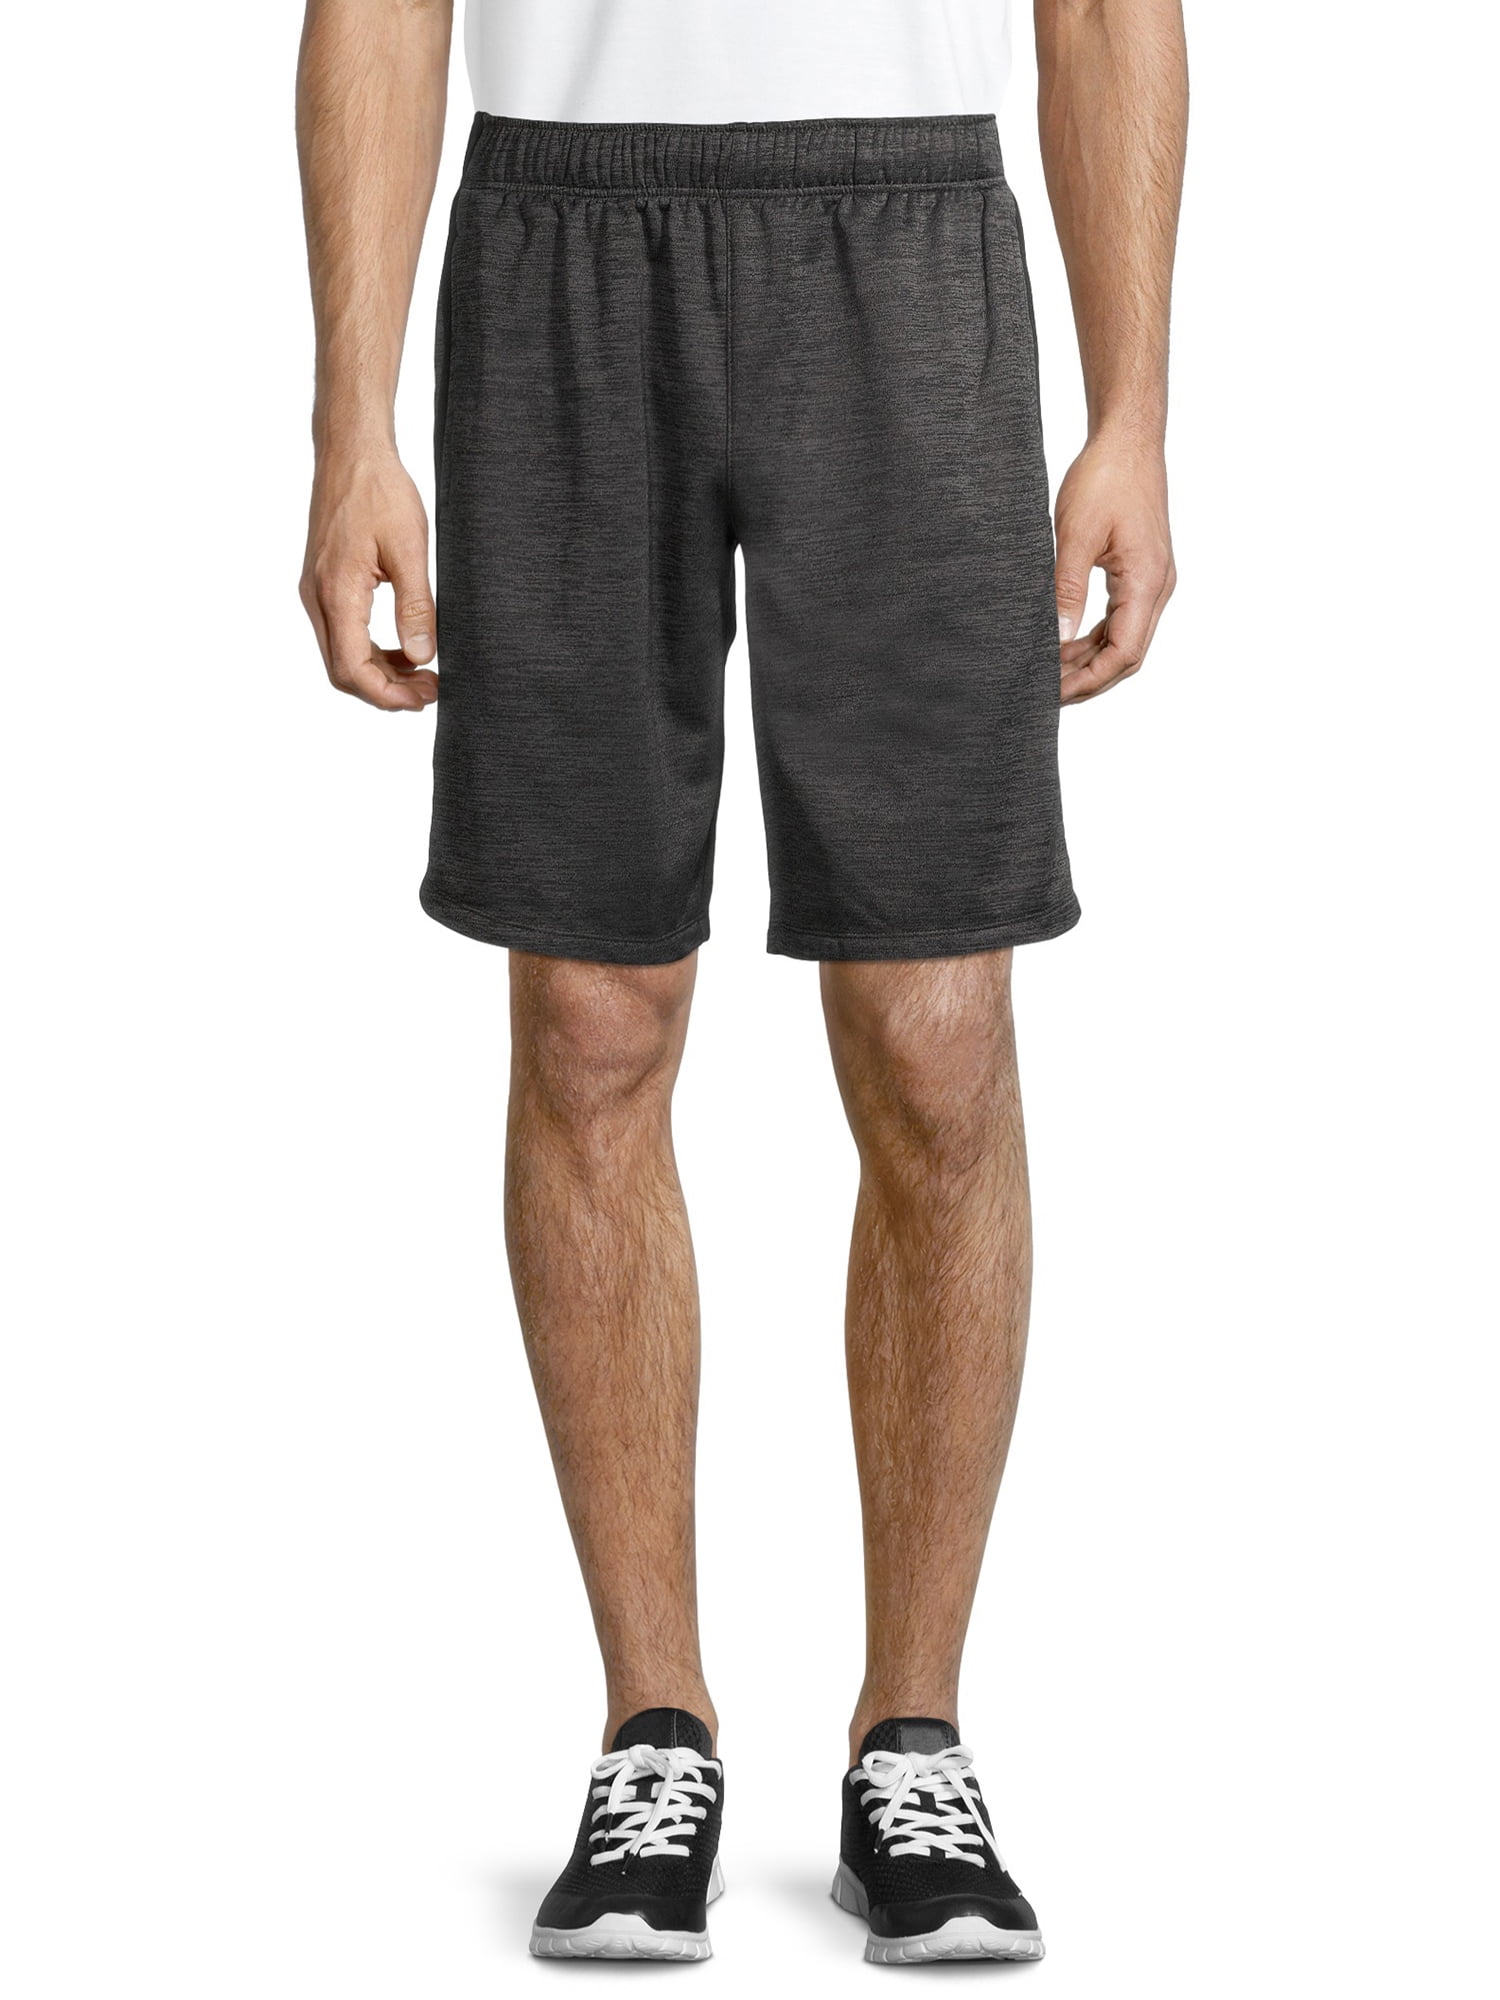 AL1VE Men's Tech Fleece Performance Shorts - Walmart.com